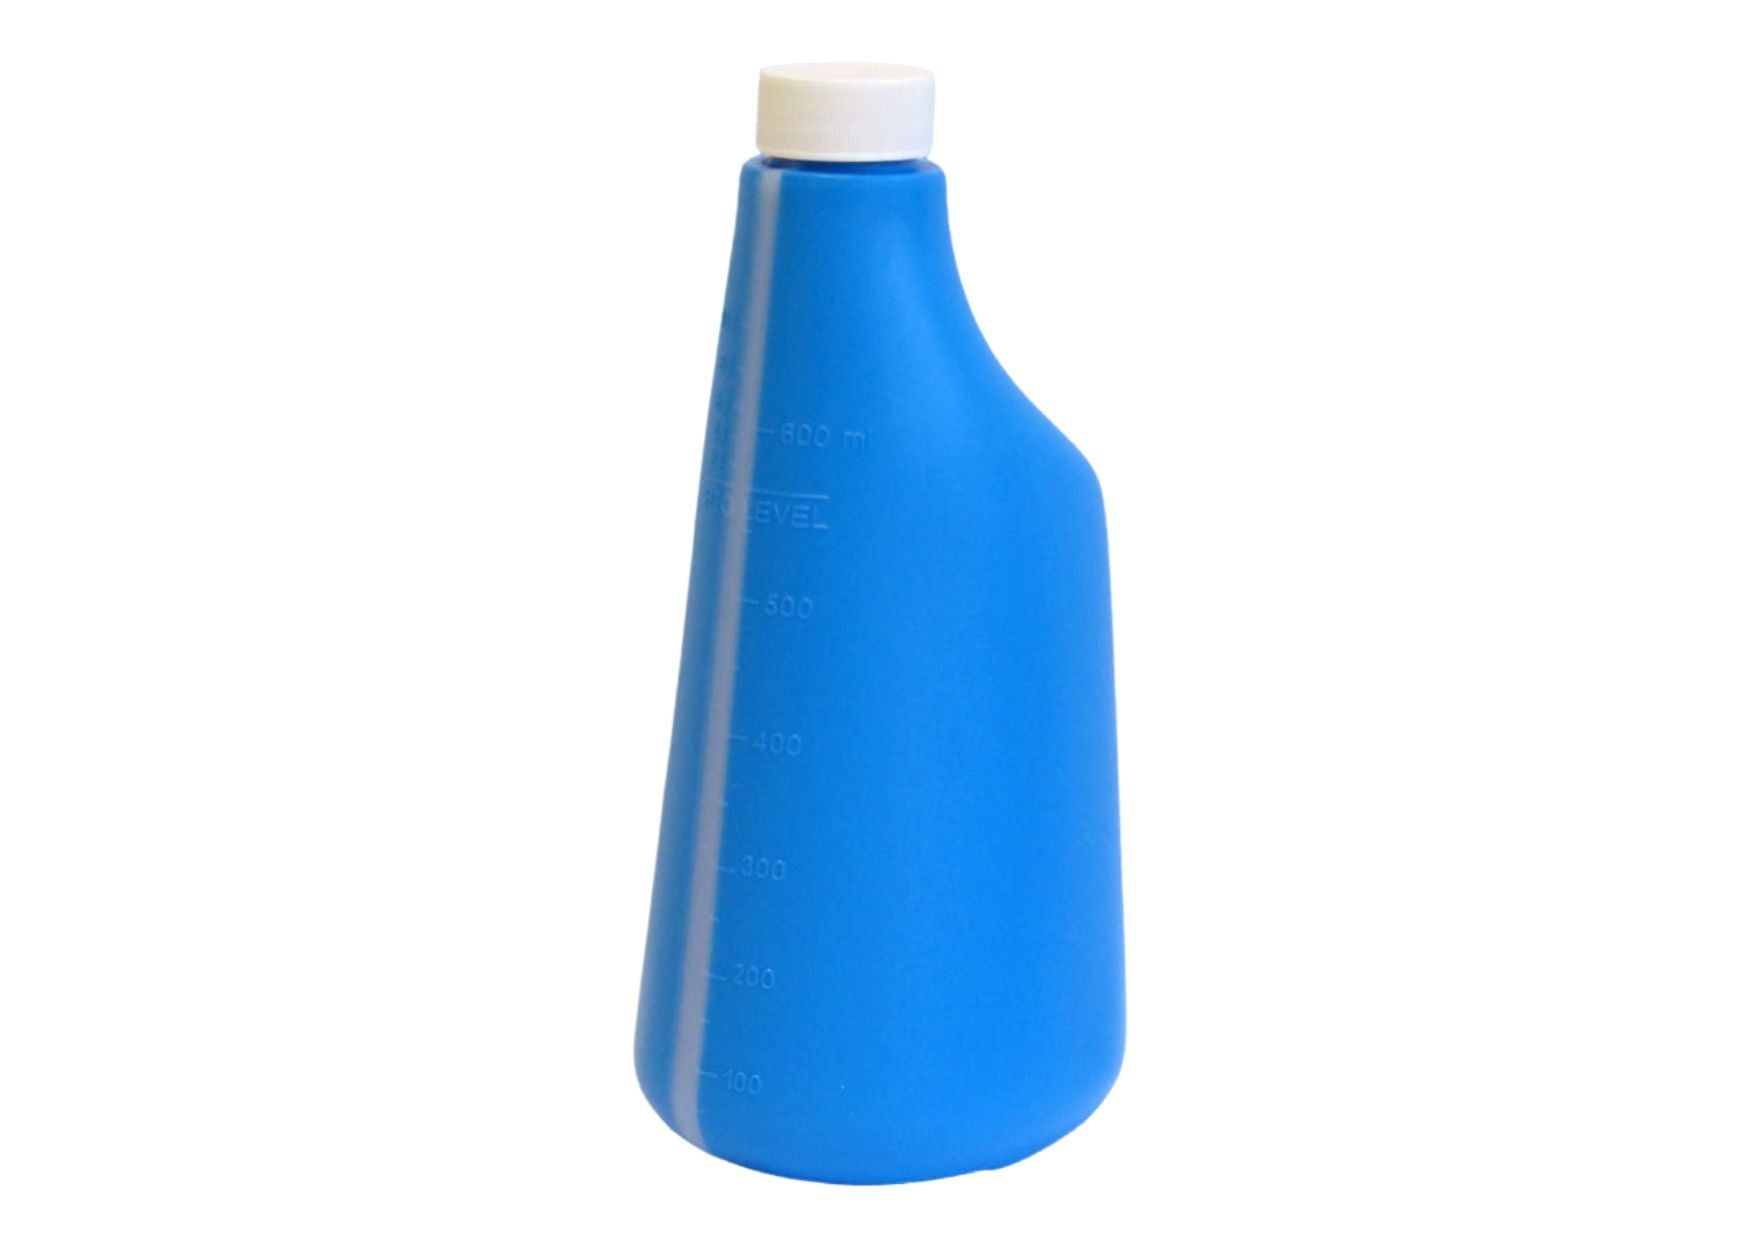 Sprüh-Leerflasche, blau, 600 ml - 0